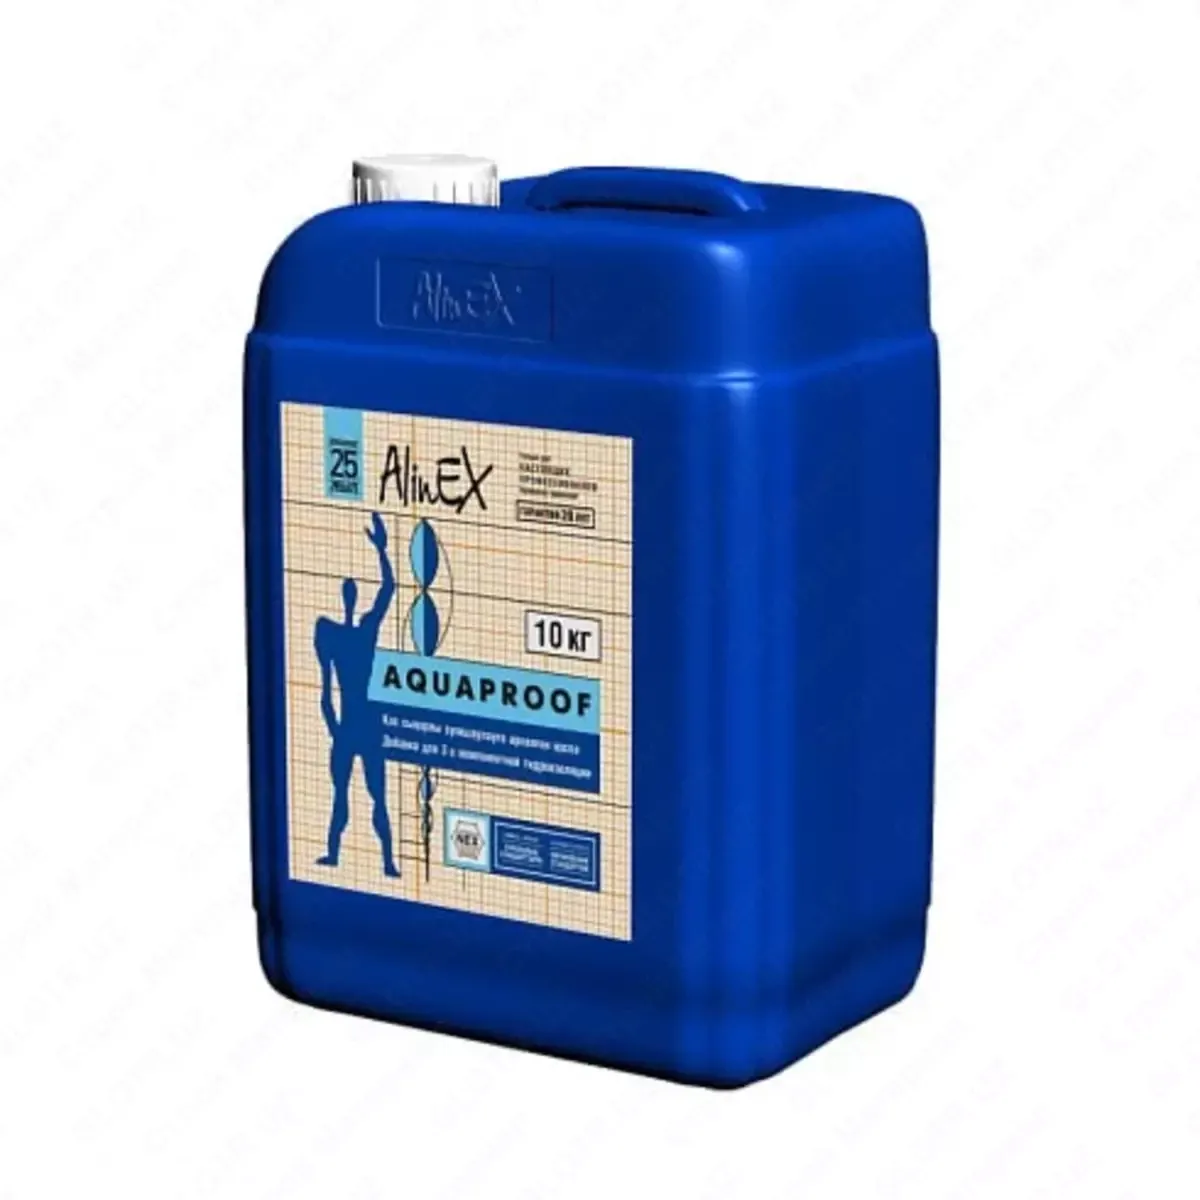 Gidroizolyatsiya Aquaproof 25 kg+10 kg ALINEX#1